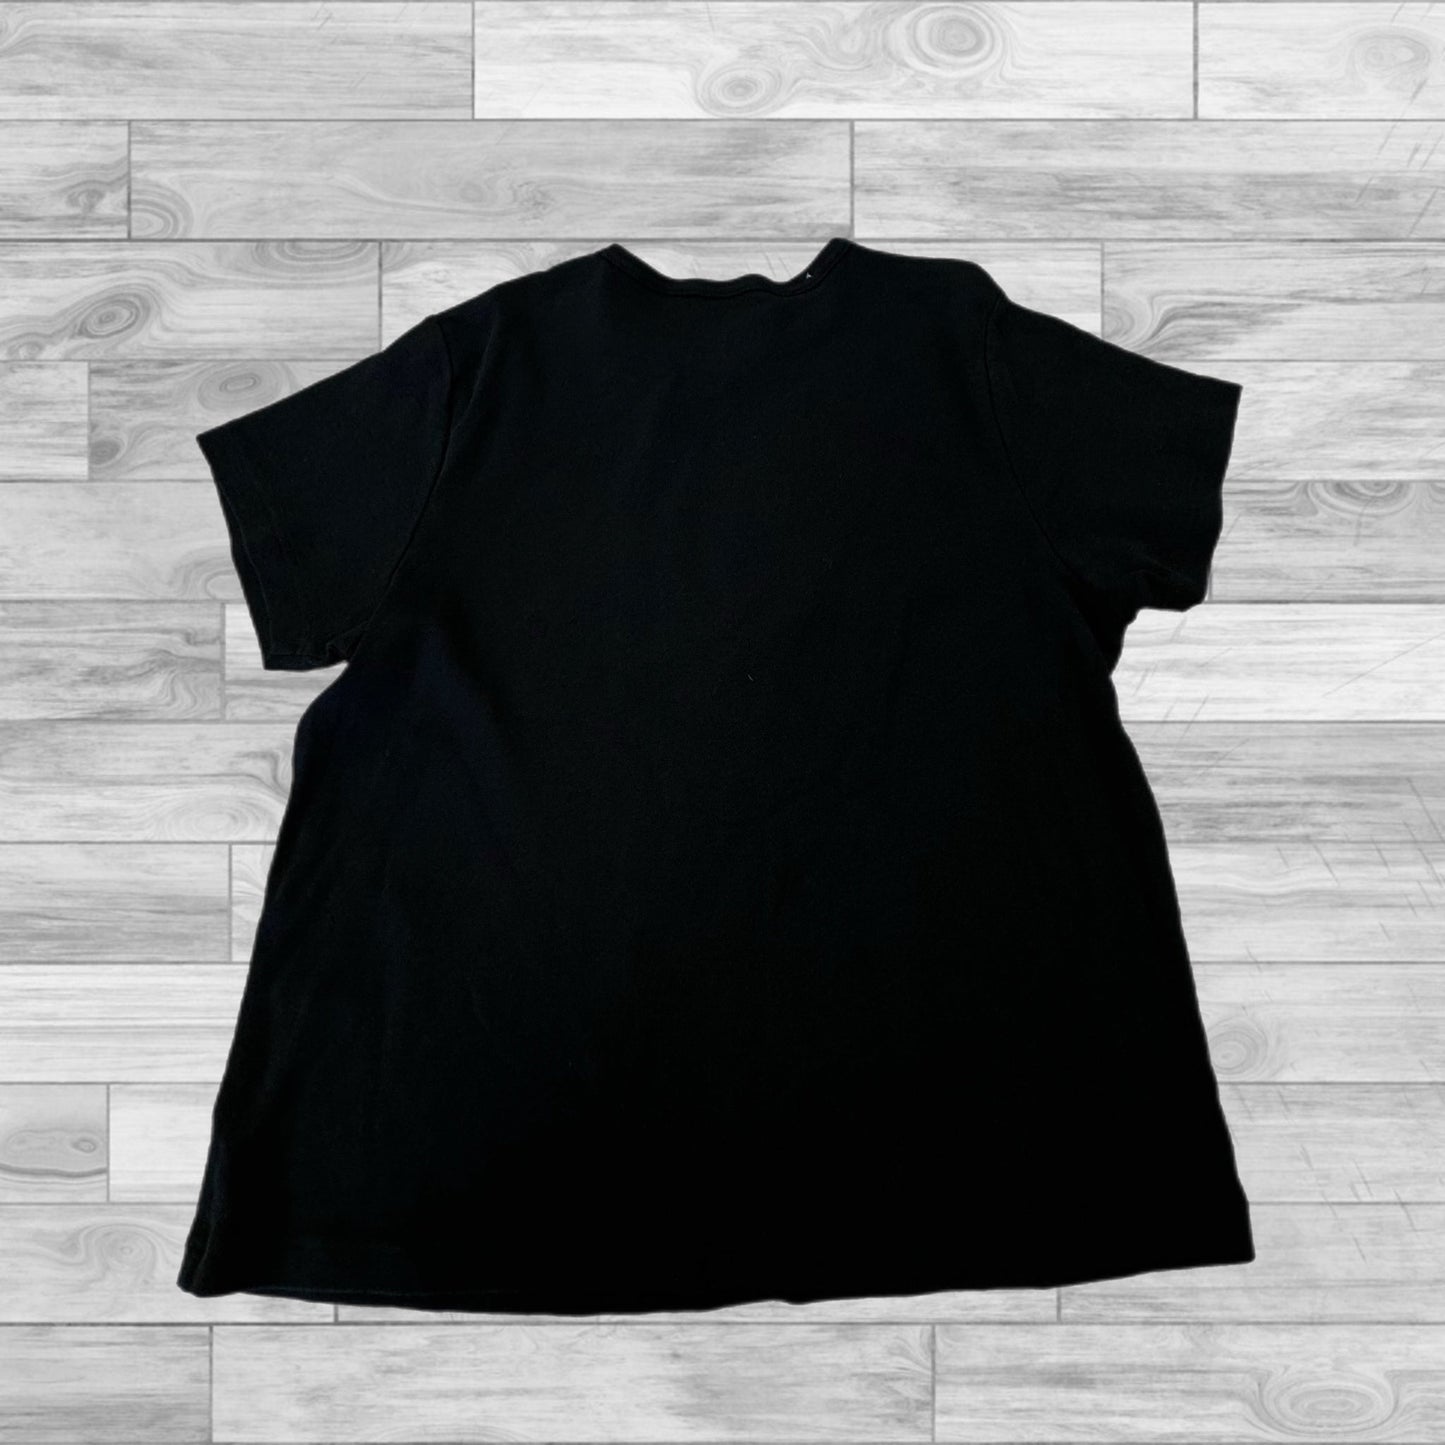 Black Top Short Sleeve Clothes Mentor, Size Xl